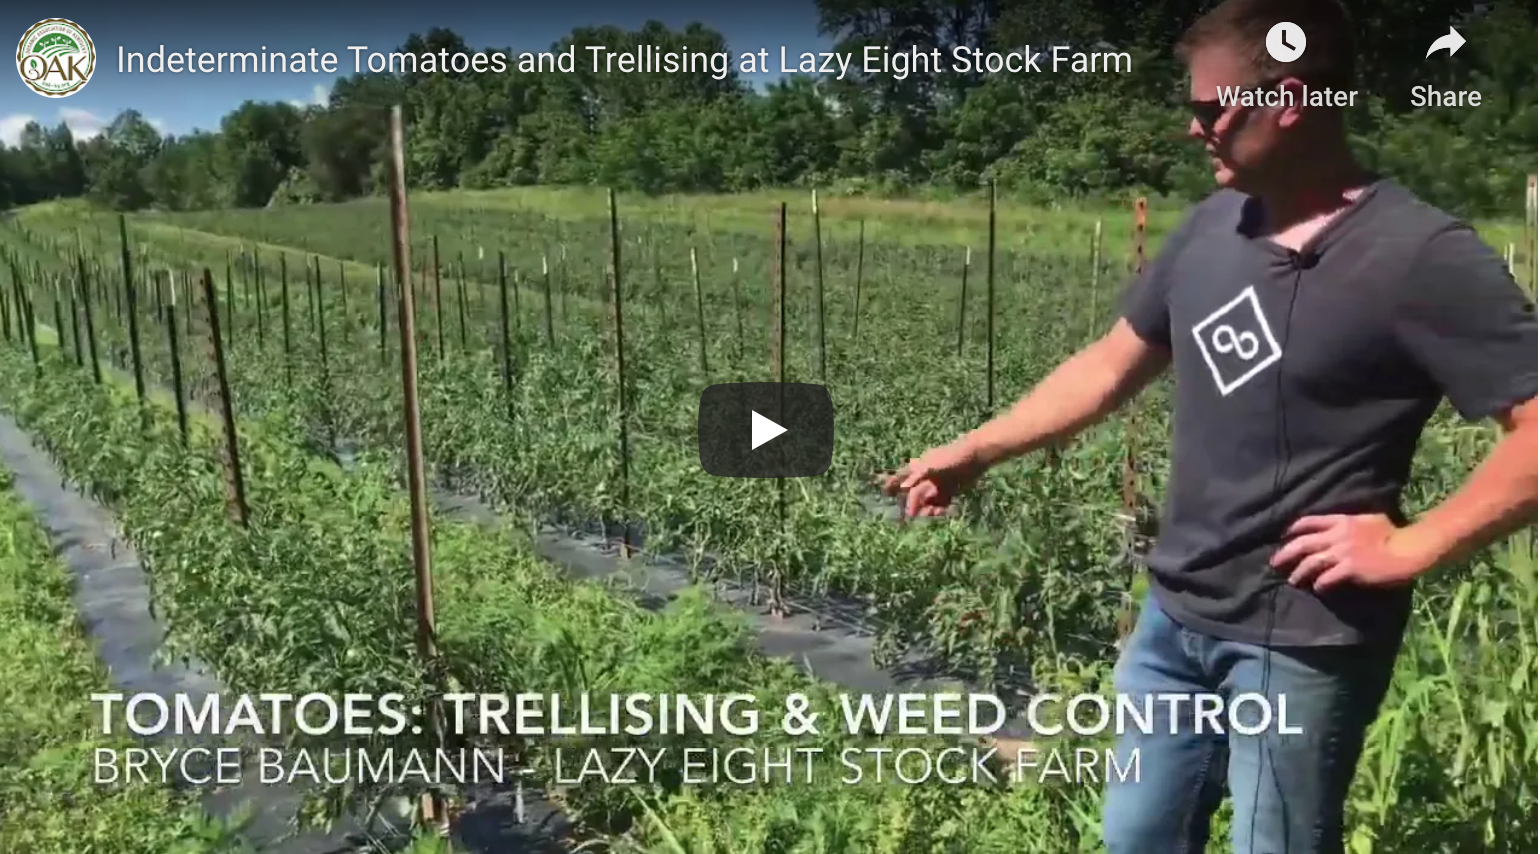 Next Happening: Trellising tomatoes at Lazy Eight Stock Farm